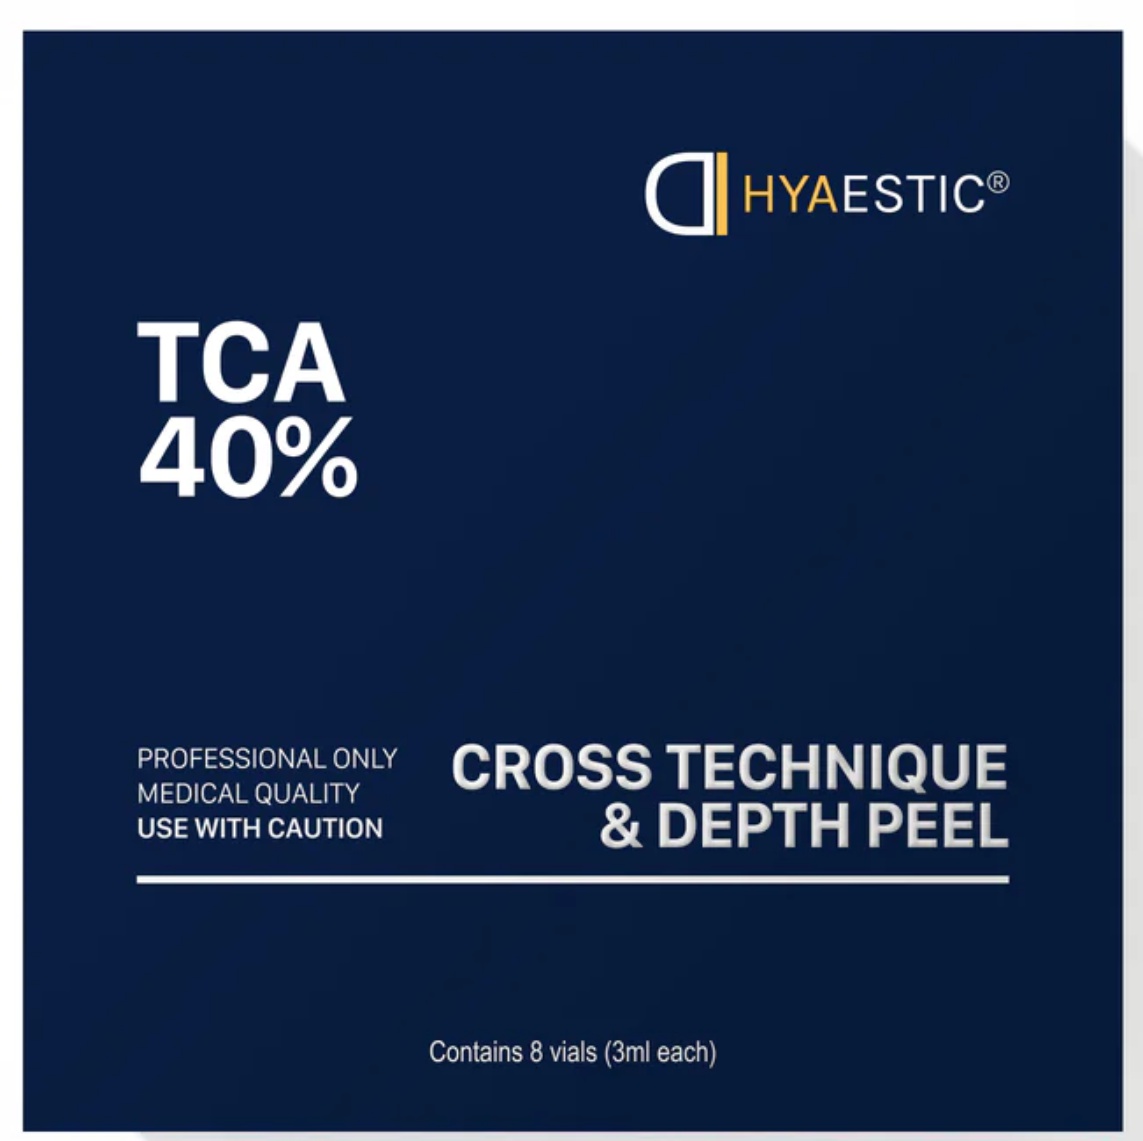 Hyaestic TCA 40% Cross Technique & Depth Peel